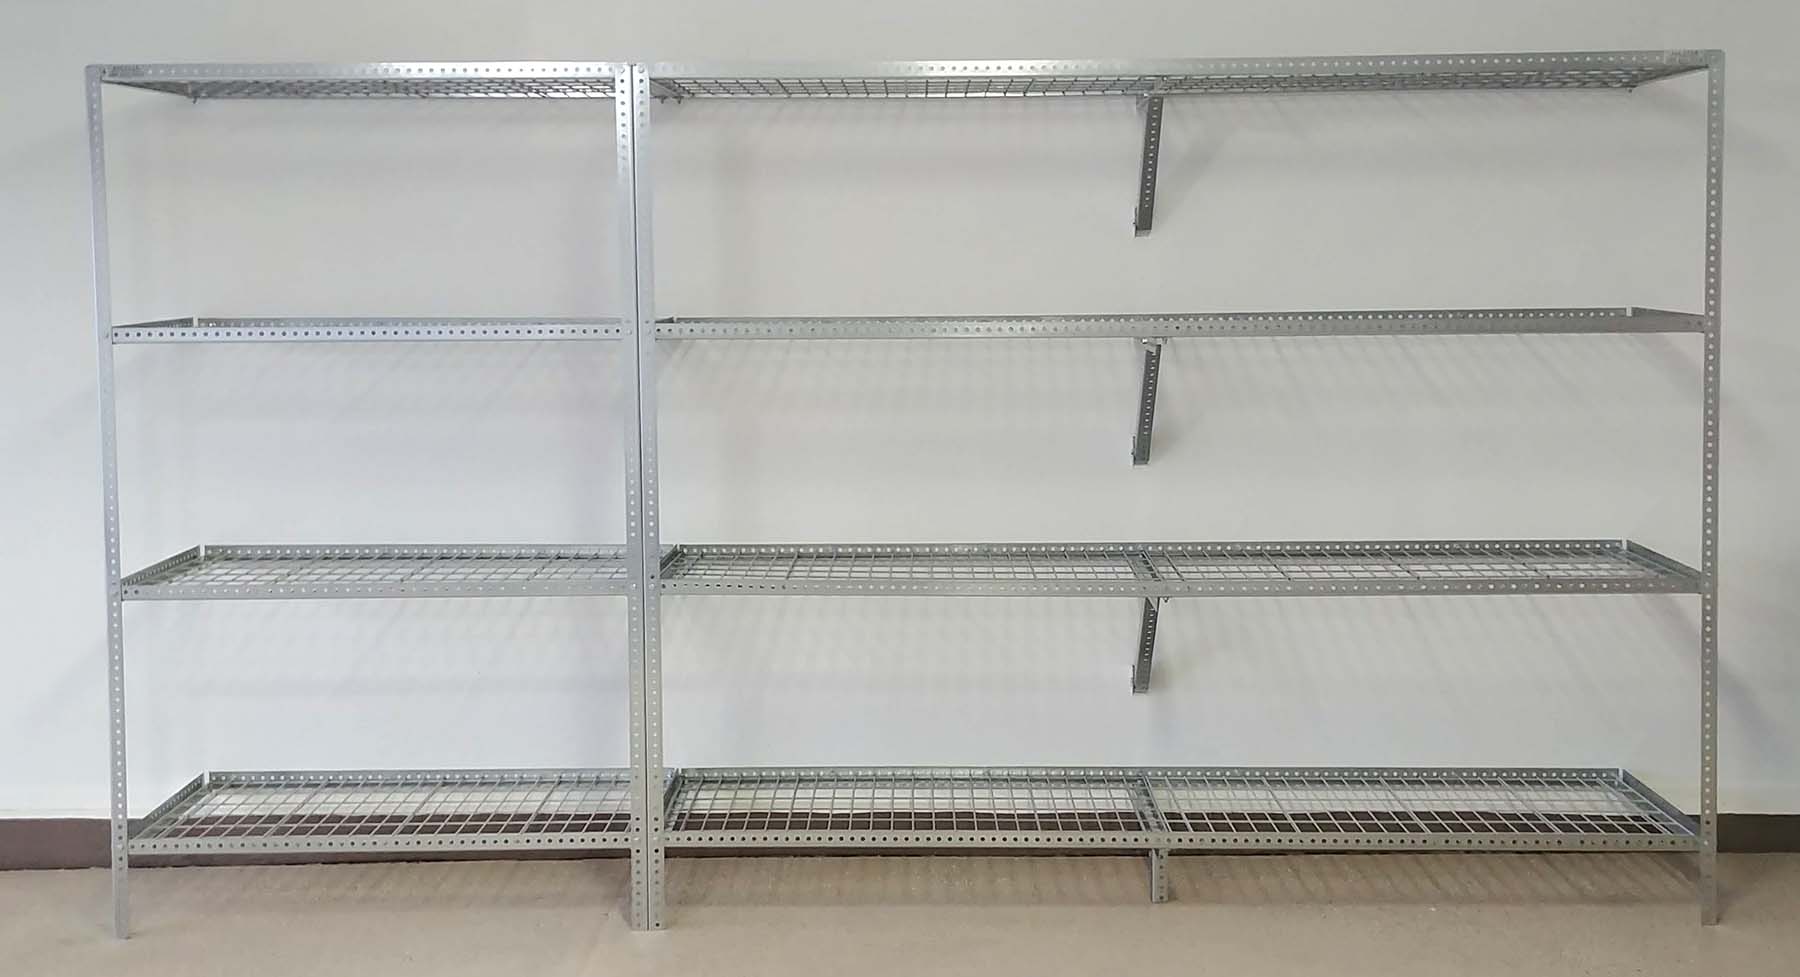 Garage Shelving Units - Heavy Duty Steel Shelves